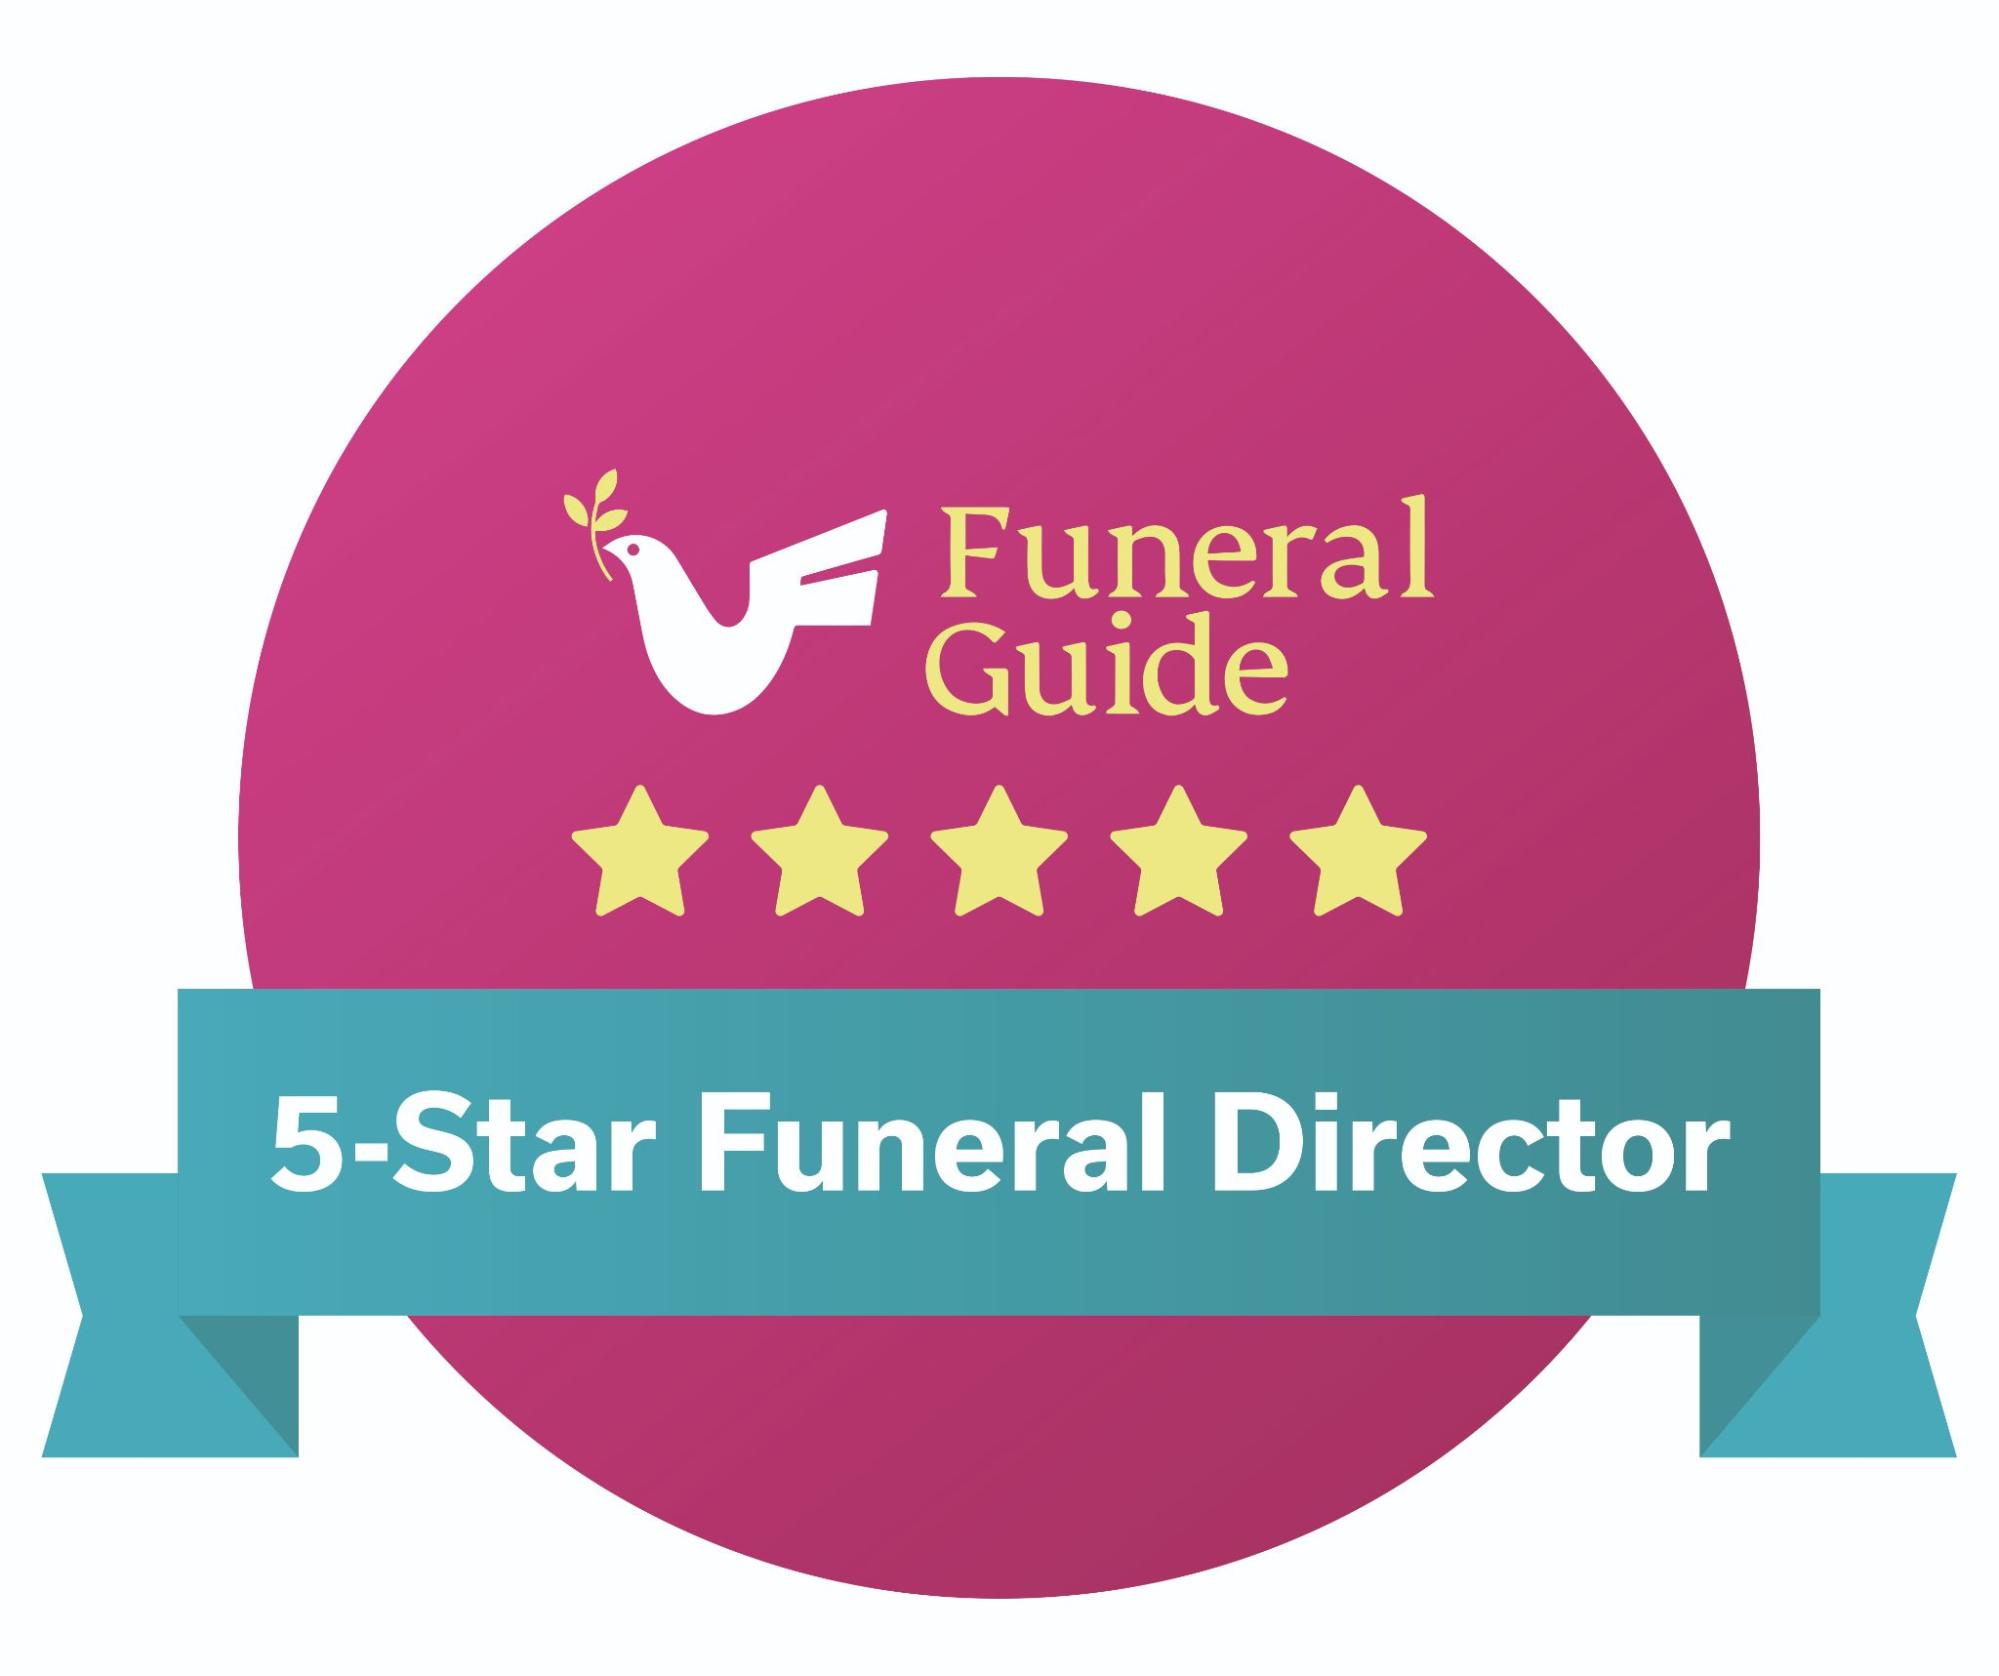 Funeral Guide - Compare Funeral Directors